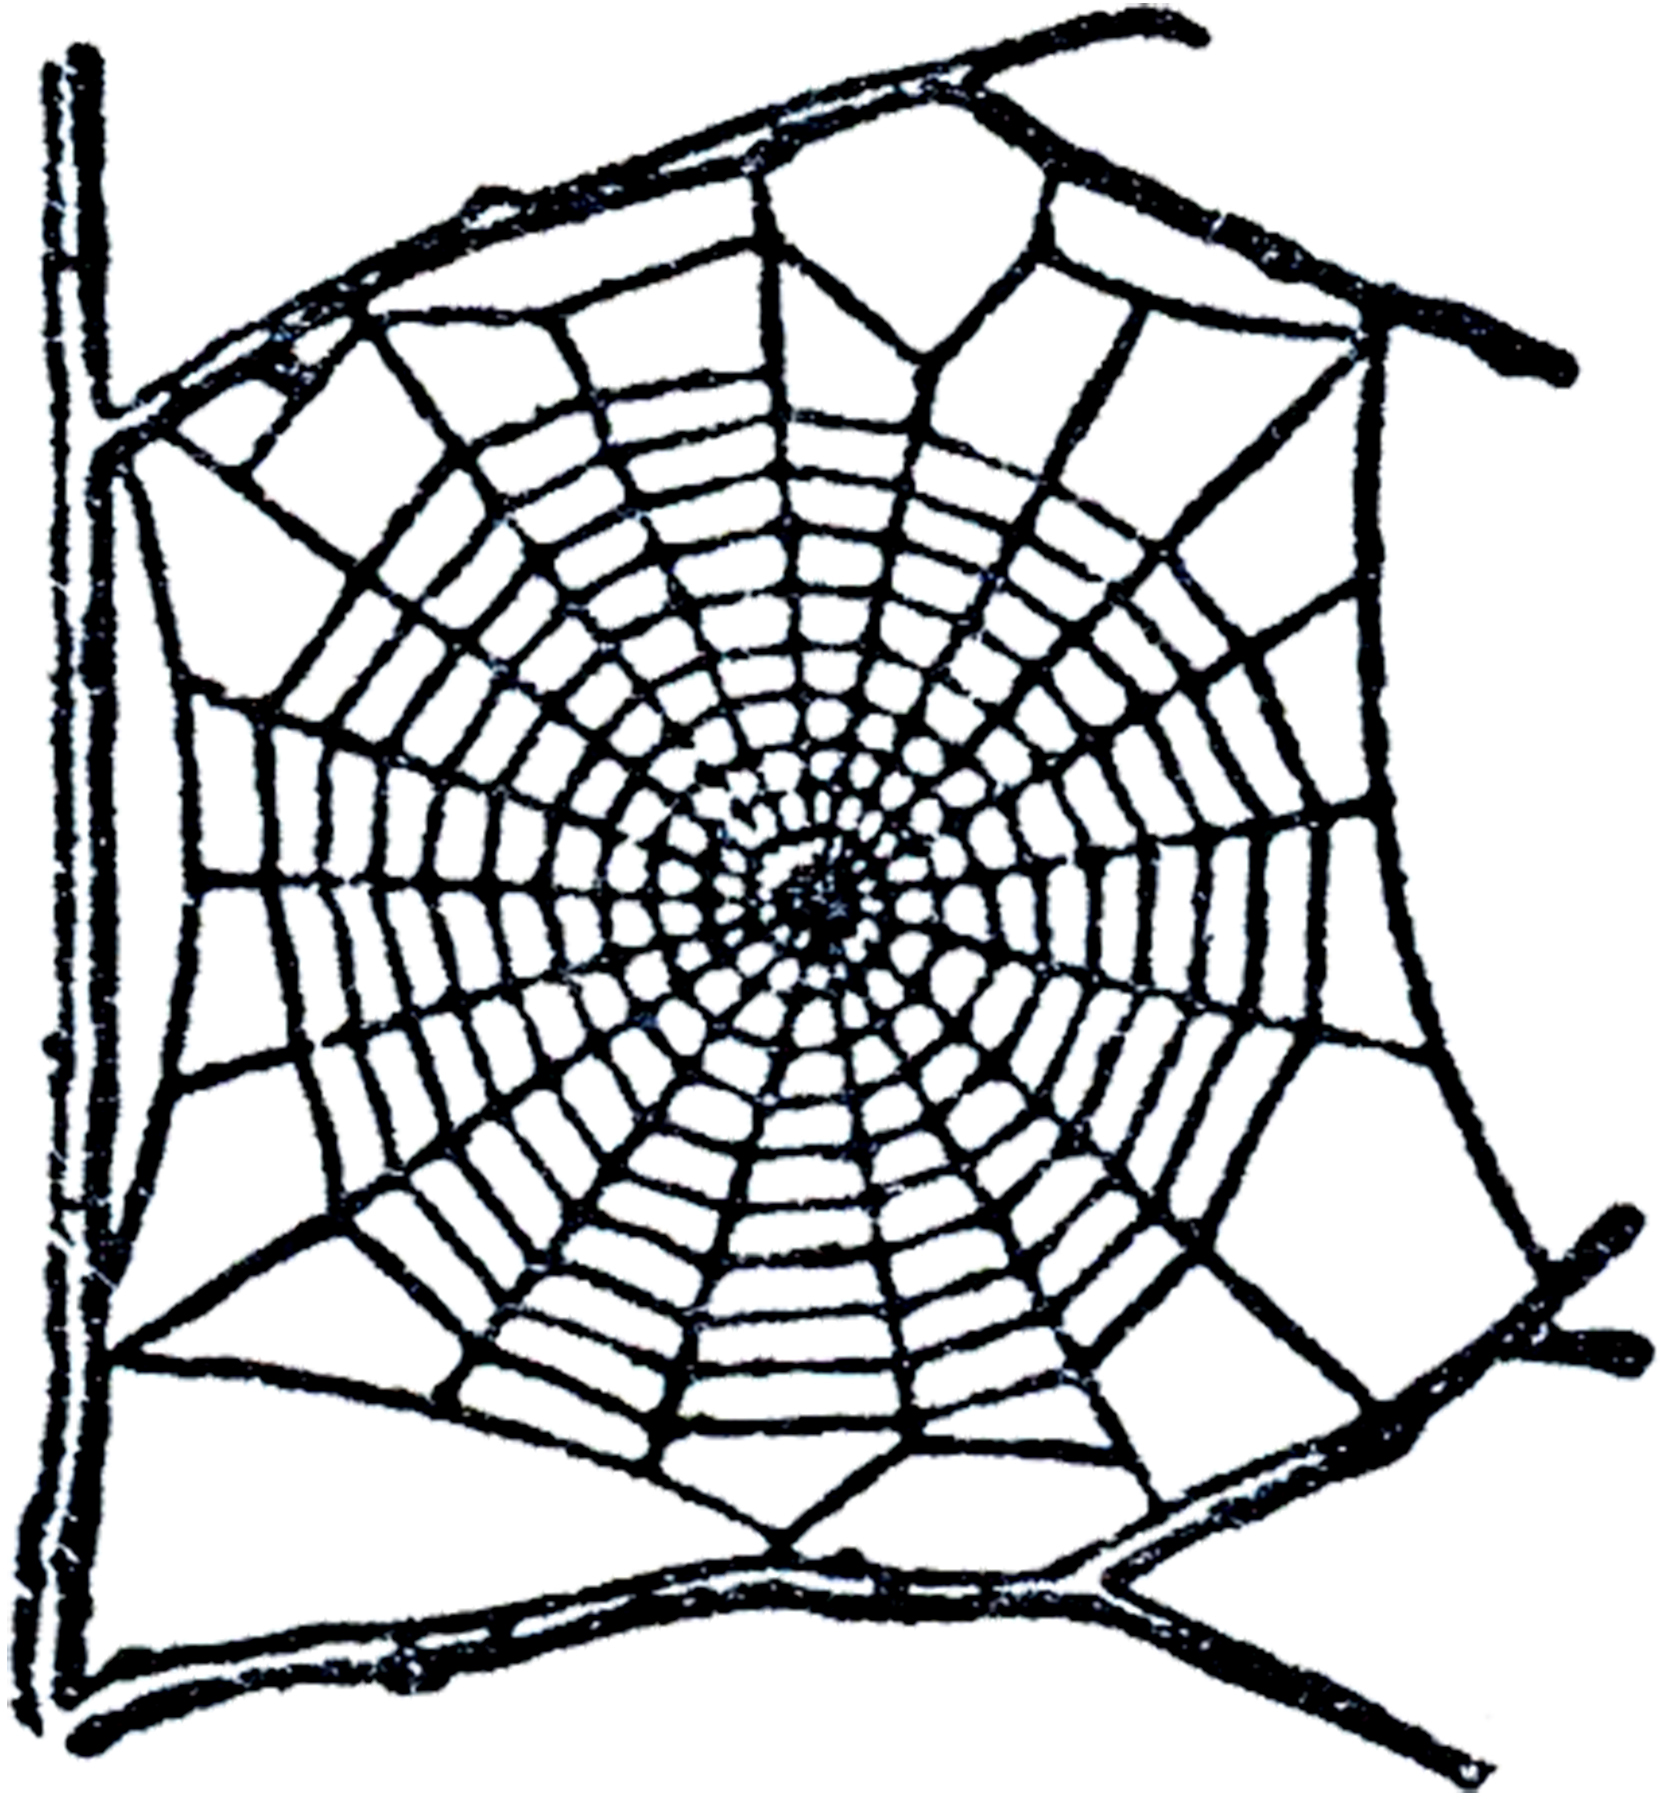 Black and white spider web clipart - ClipartFox